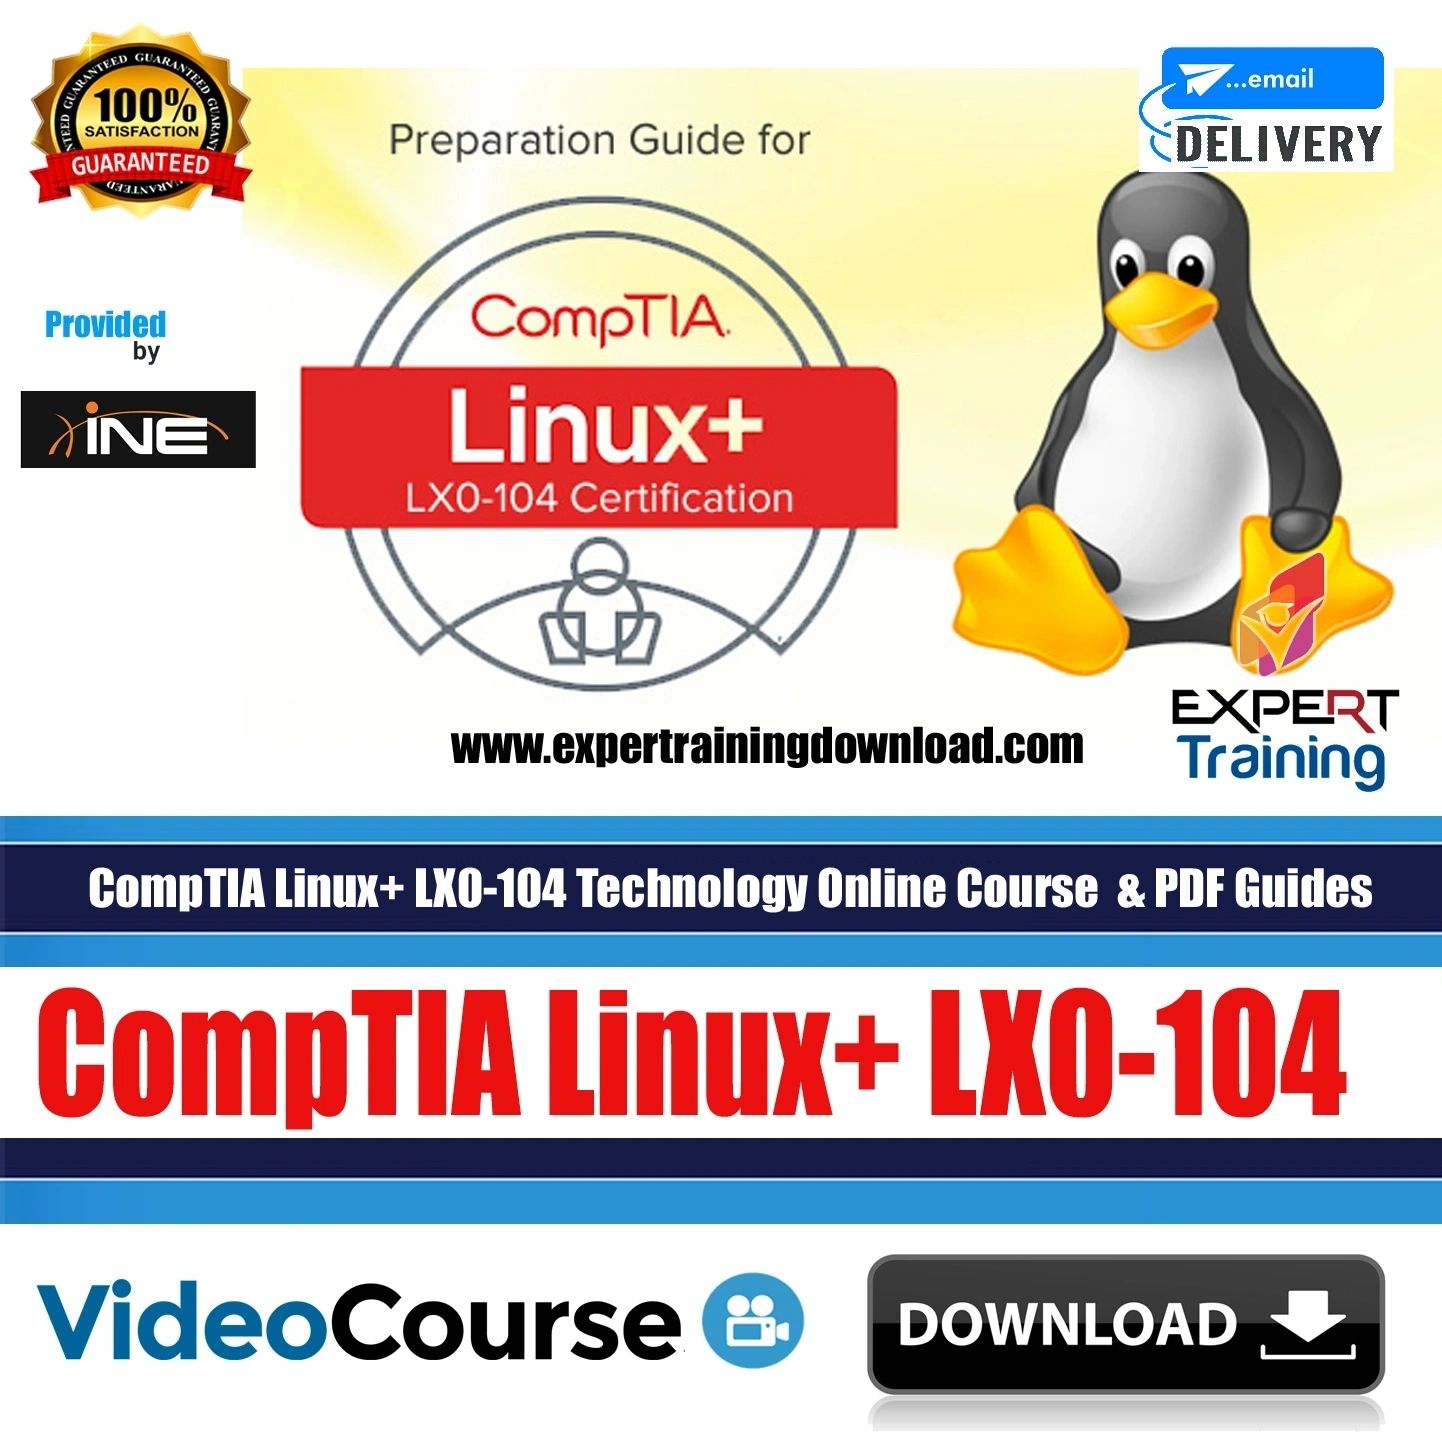 CompTIA Linux+ LX0-104 Technology Course & PDF Guides